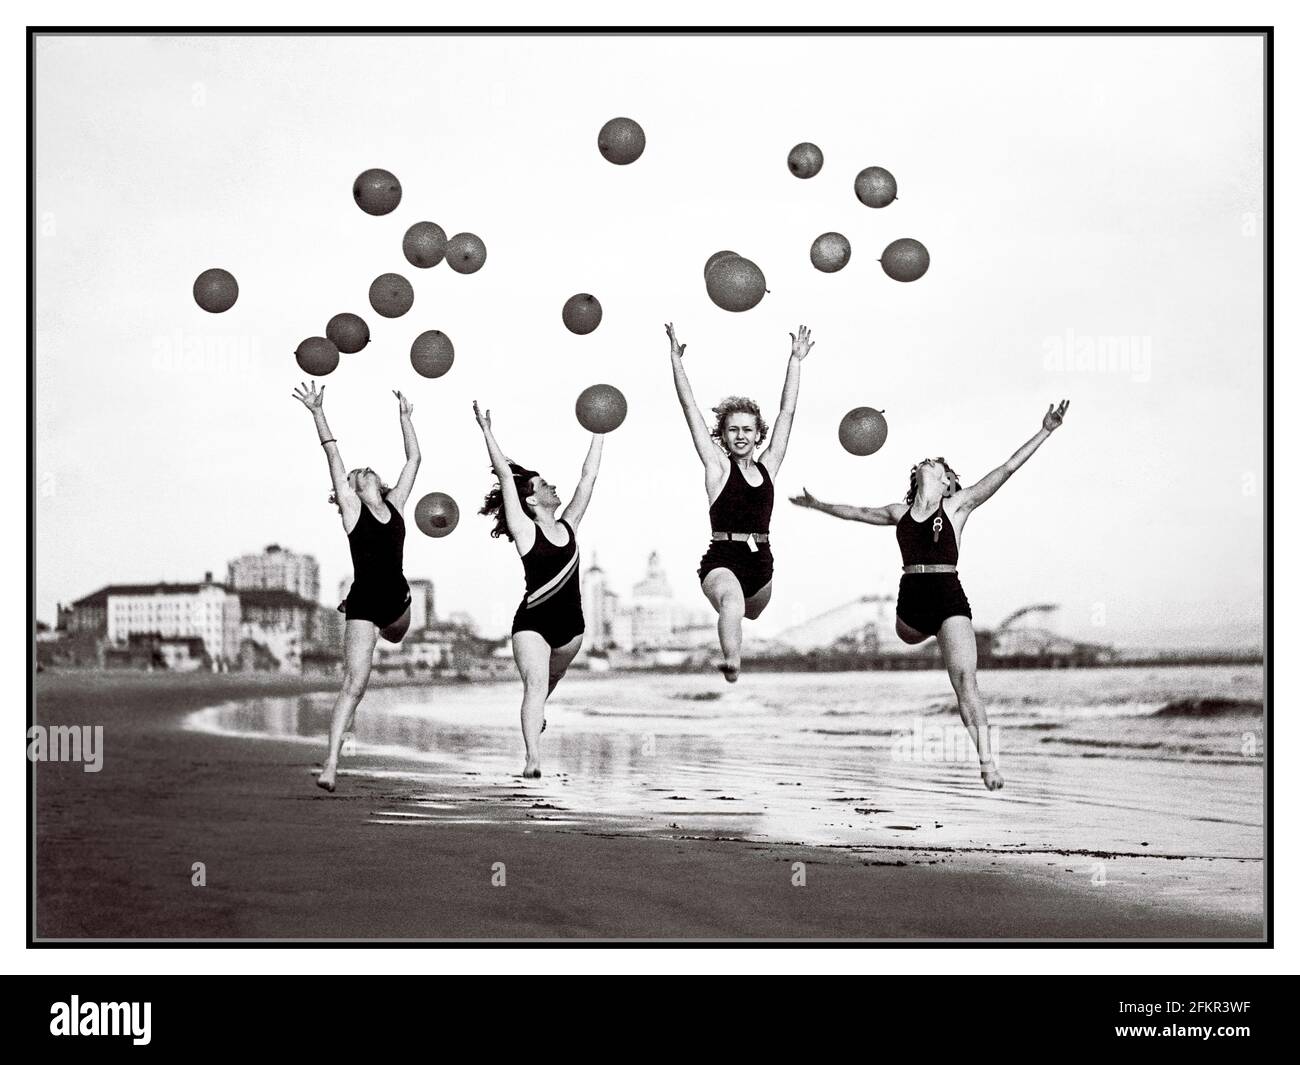 Vintage 1930's Atlantic City USA Balloon Dance Dancers vitality health Retro Beach B&W Lifestyle Photo Stock Photo